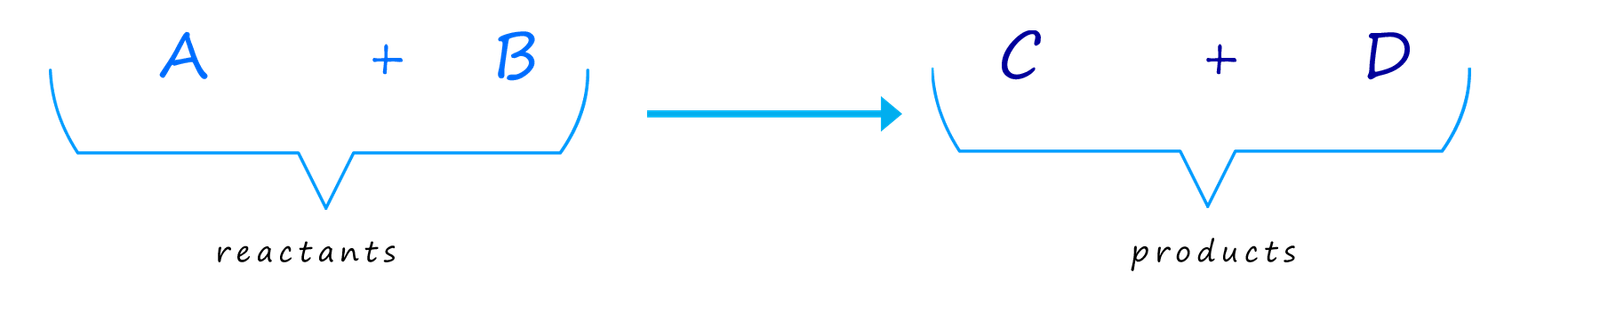 Reversible reaction exampleequation.